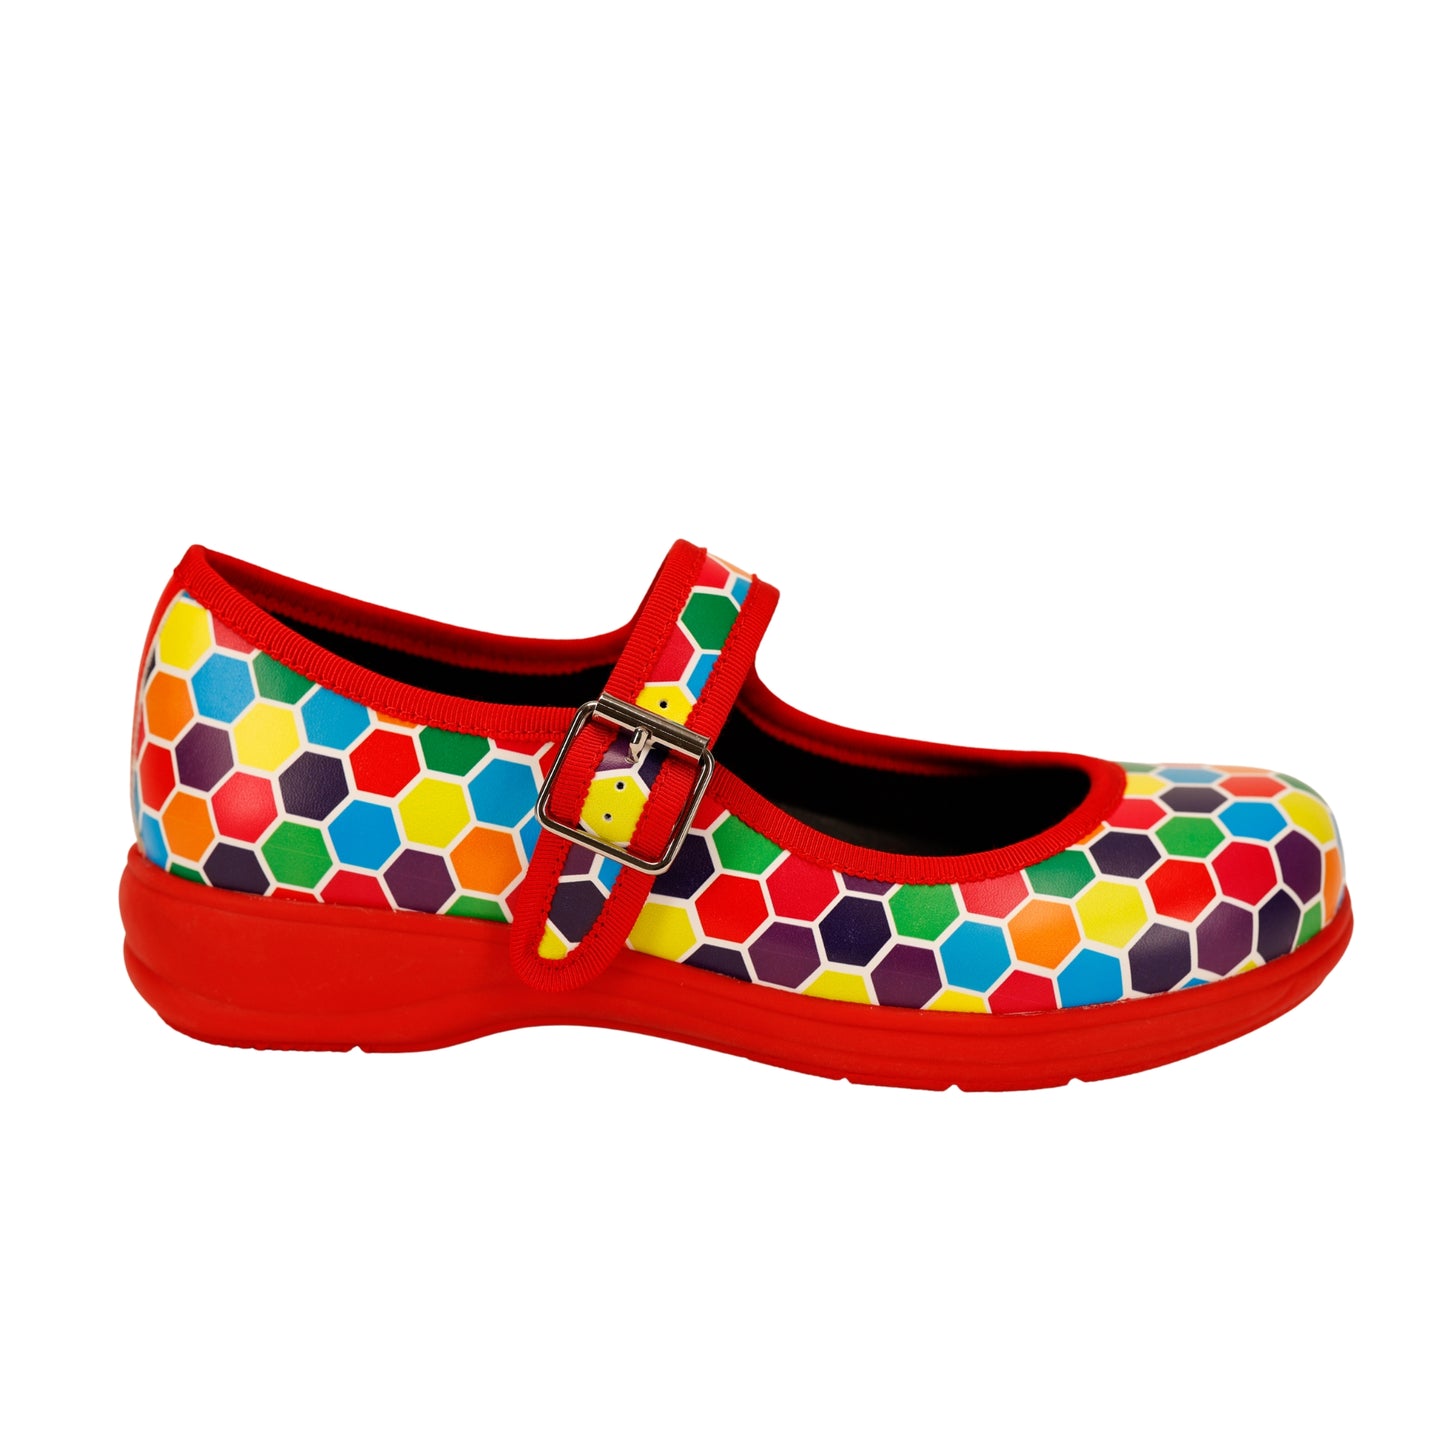 Honeycomb Mary Janes by RainbowsAndFairies.com.au (Hexagon - Rainbow - Honeycomb Print - Buckle Up Shoes - Mismatched Shoes - Stripes) - SKU: FW_MARYJ_HONEY_ORG - Pic-04